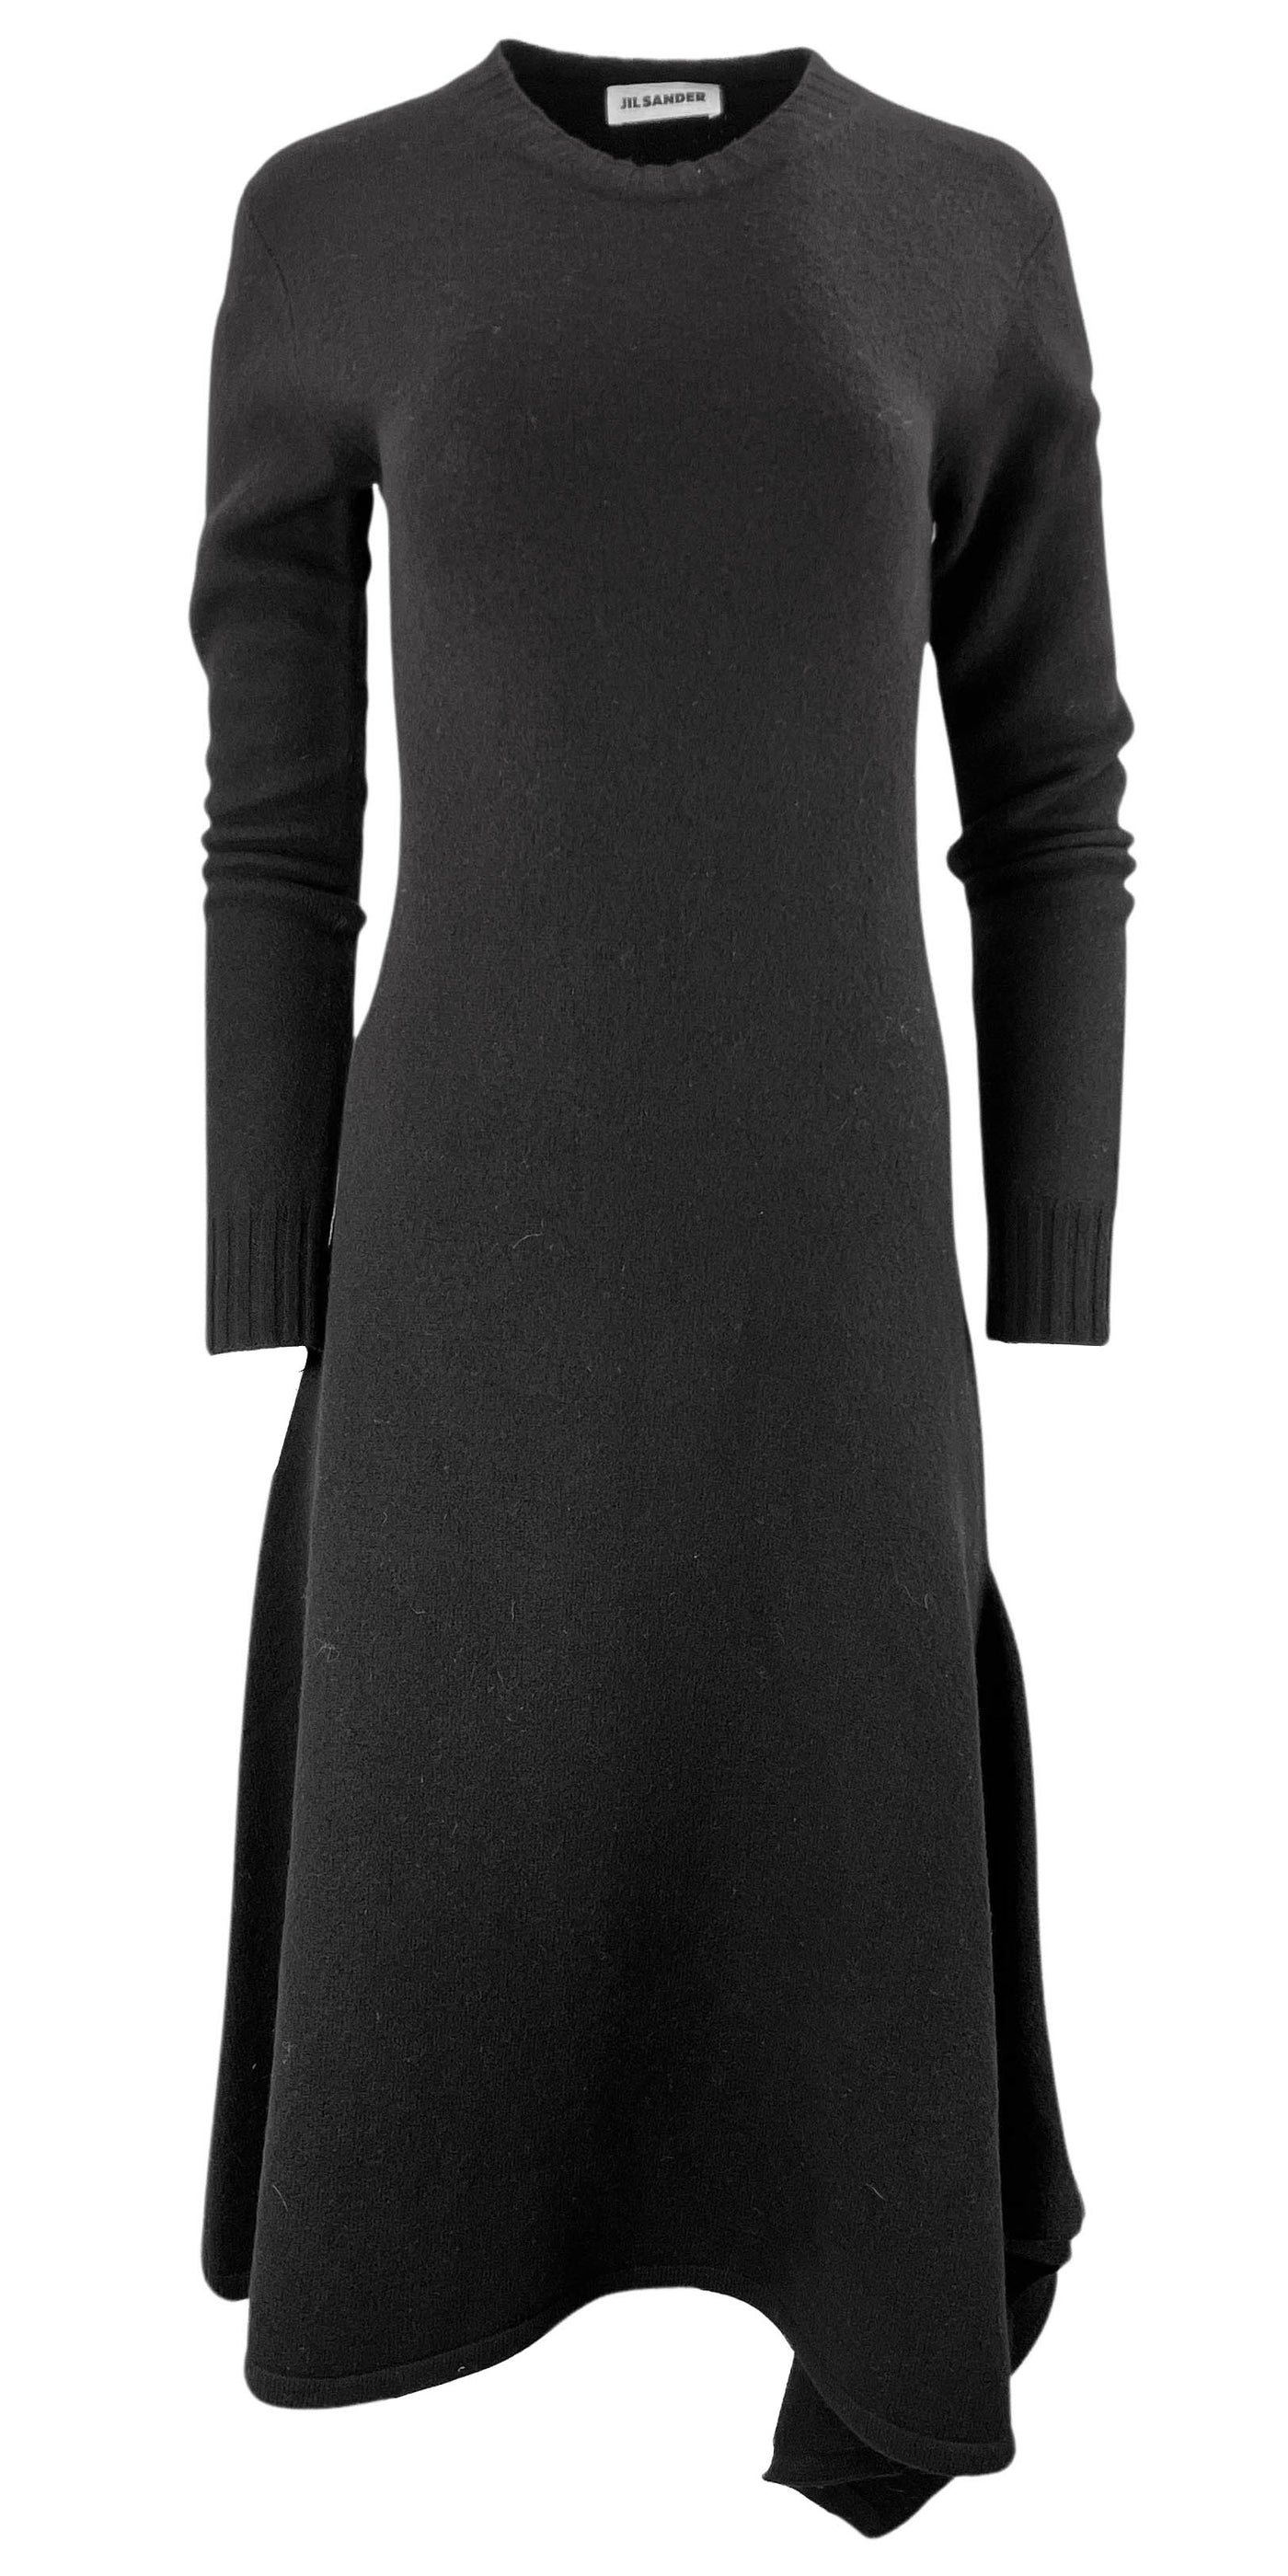 Jil Sander Knit Dress in Black - Discounts on Jil Sander at UAL